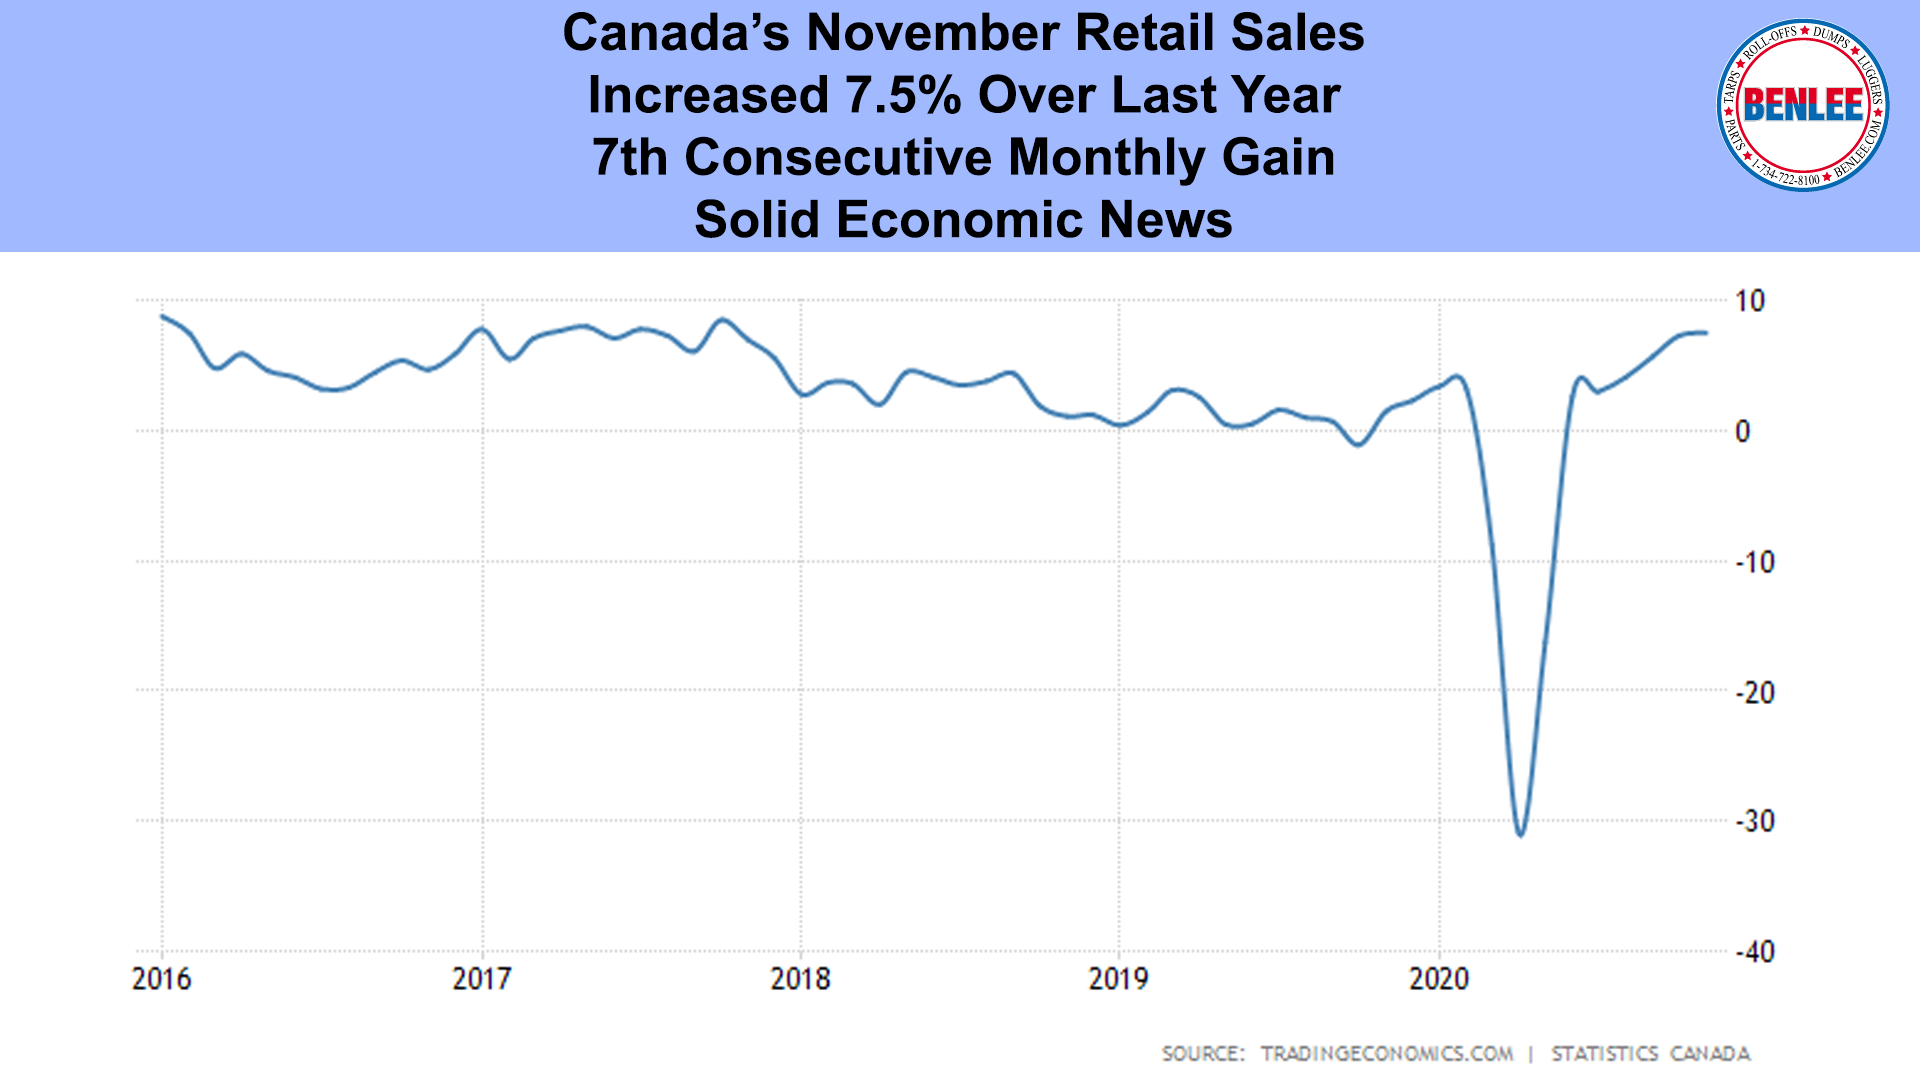 Canada’s November Retail Sales